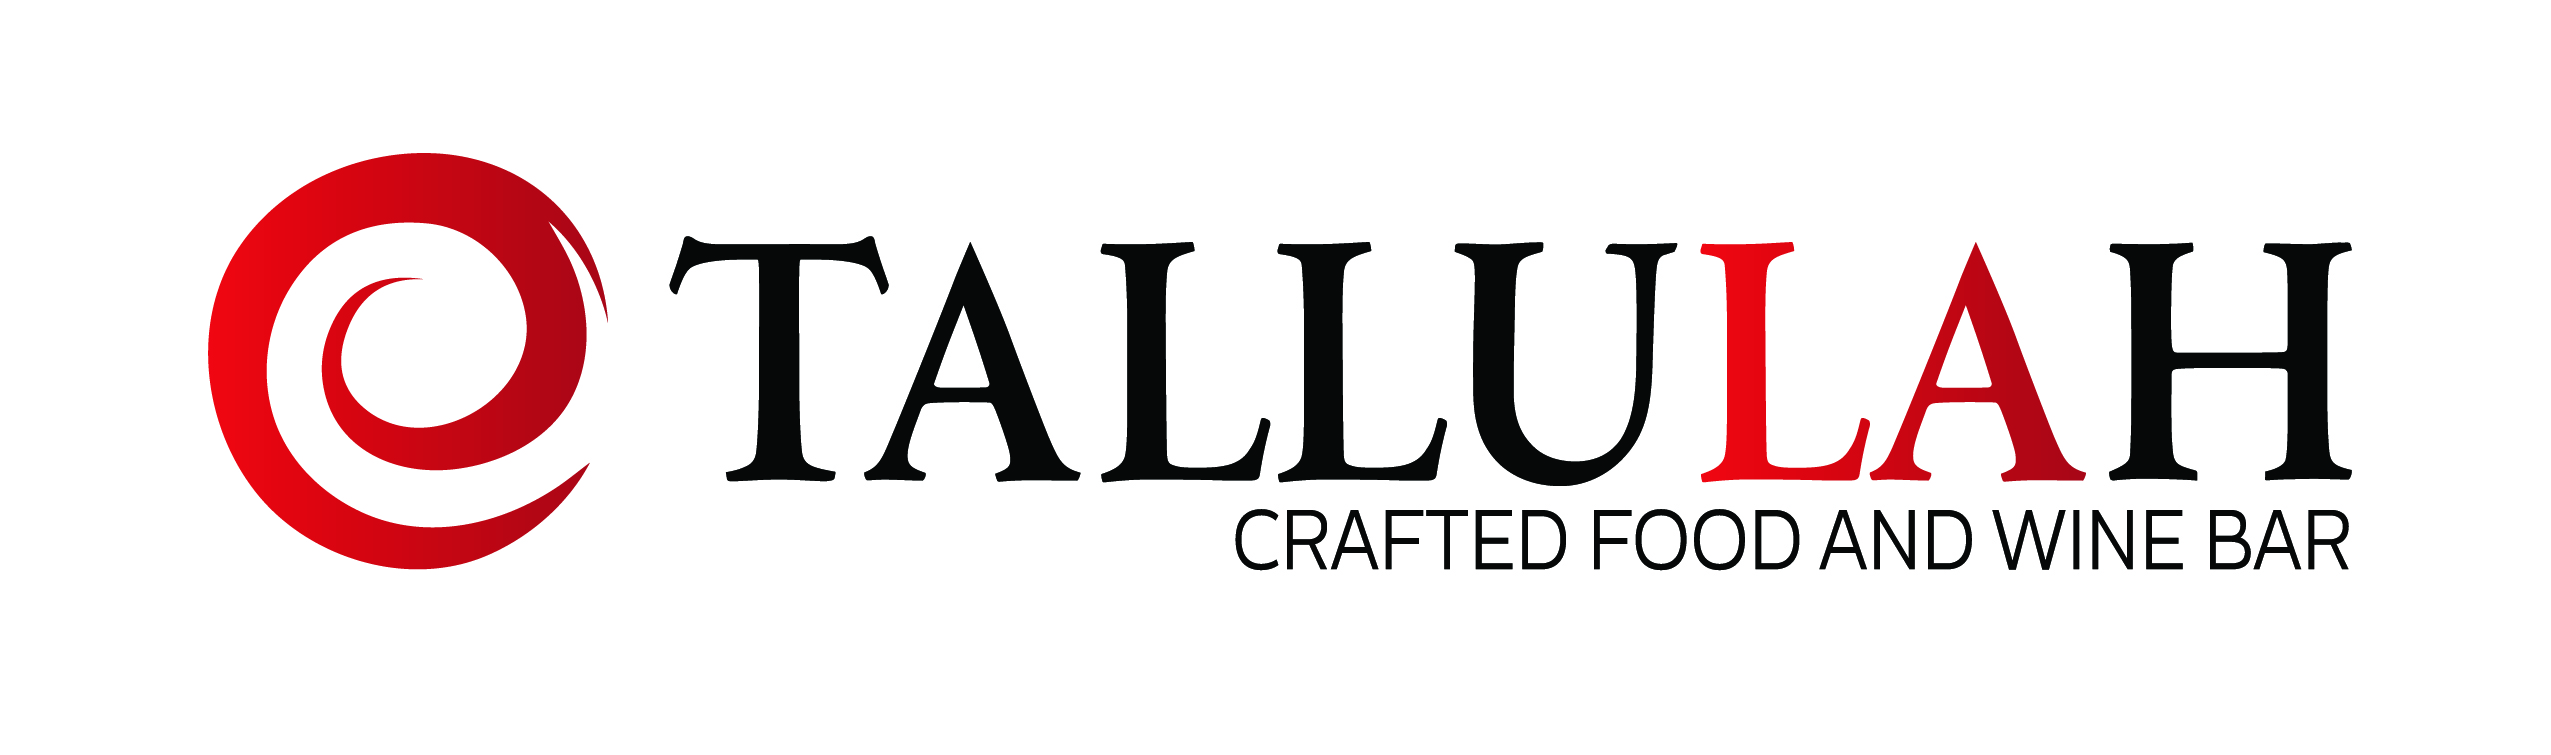 Tallulah Crafted Food & Wine Bar